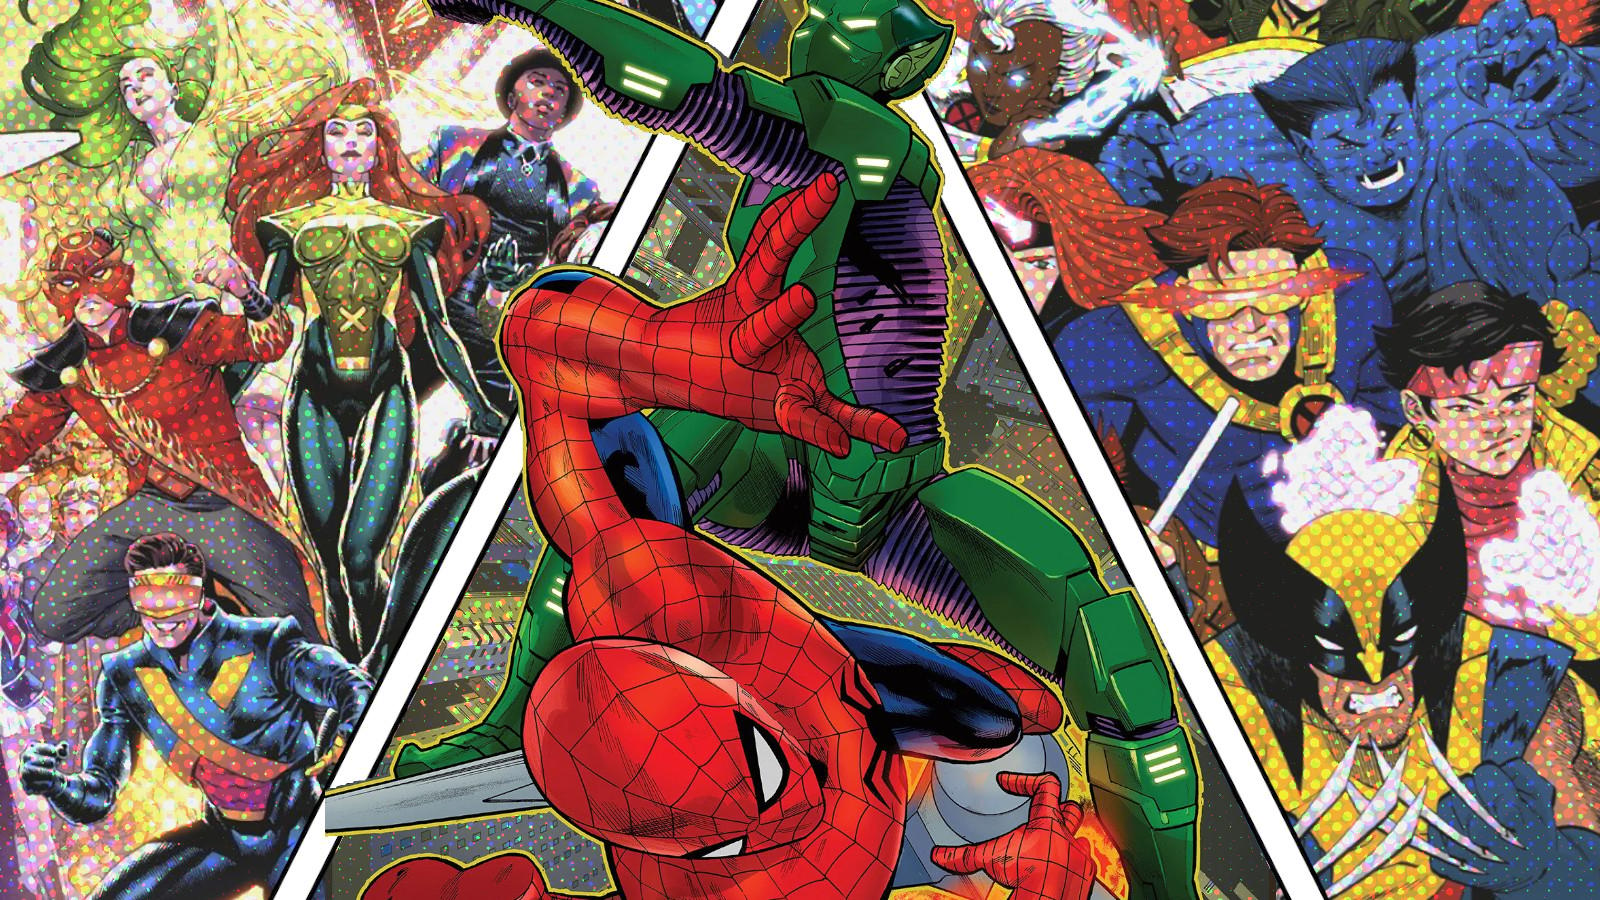 X-Men, Ultimate Spider-Man, and X-Men '97 art